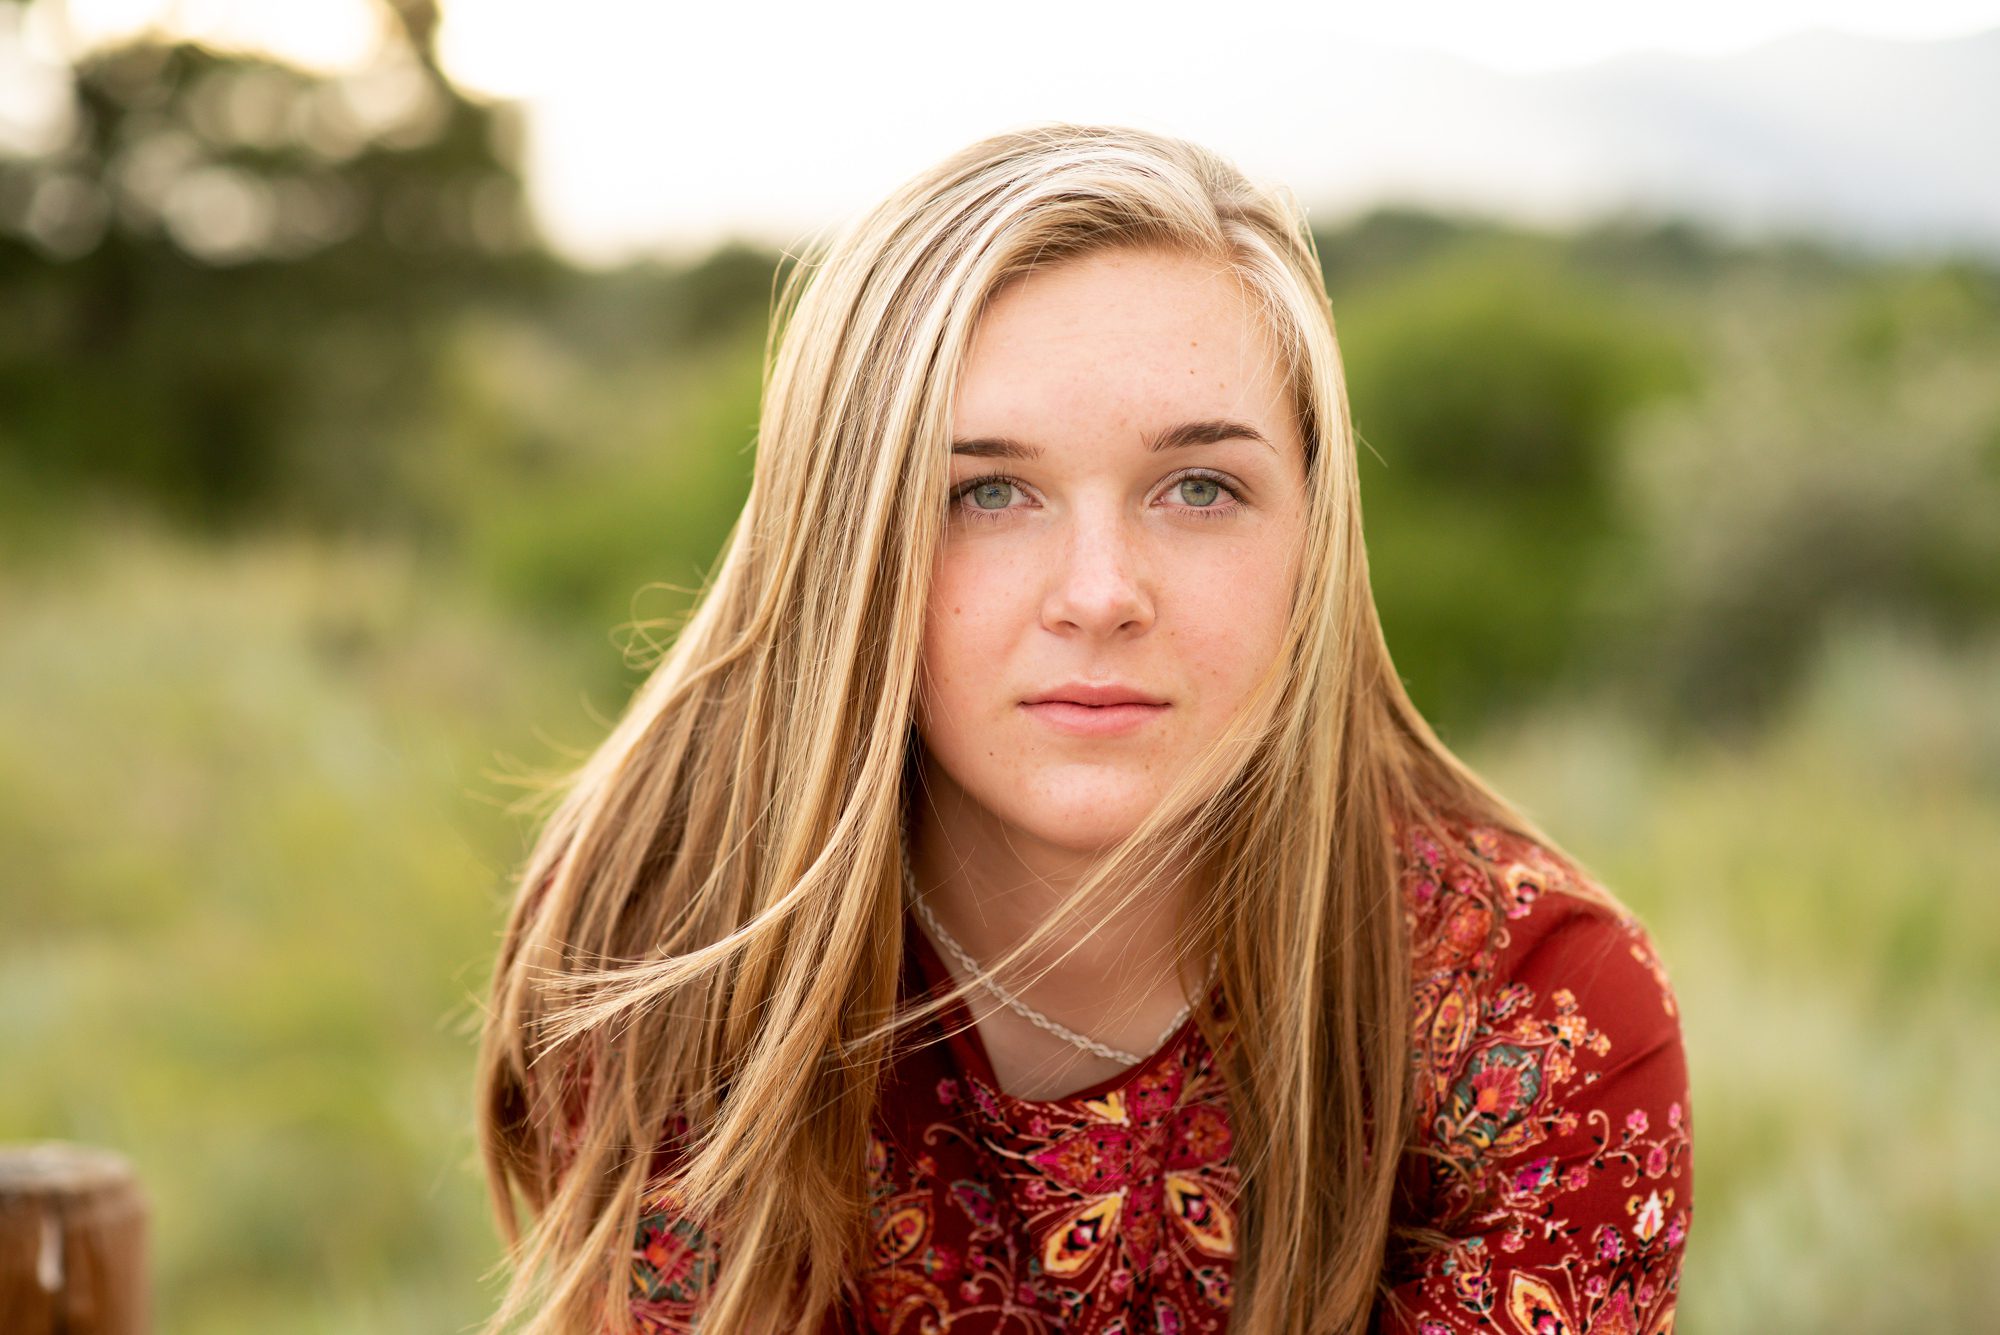 Colorado Springs high school senior photo session with portrait photographer